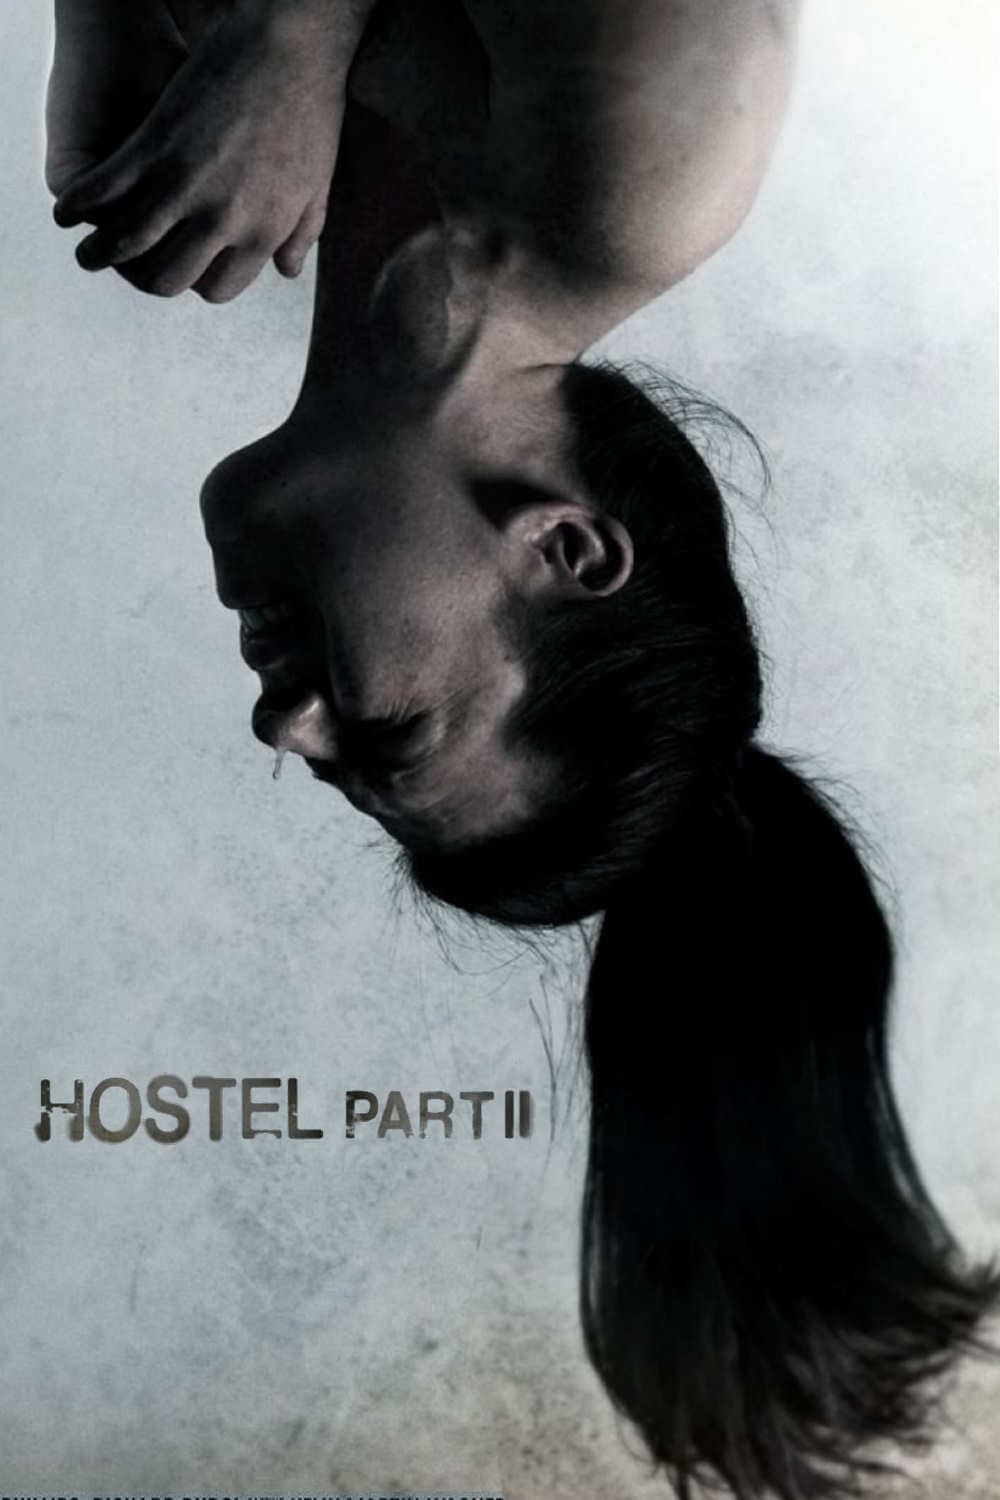 Hostel 2 (2007)